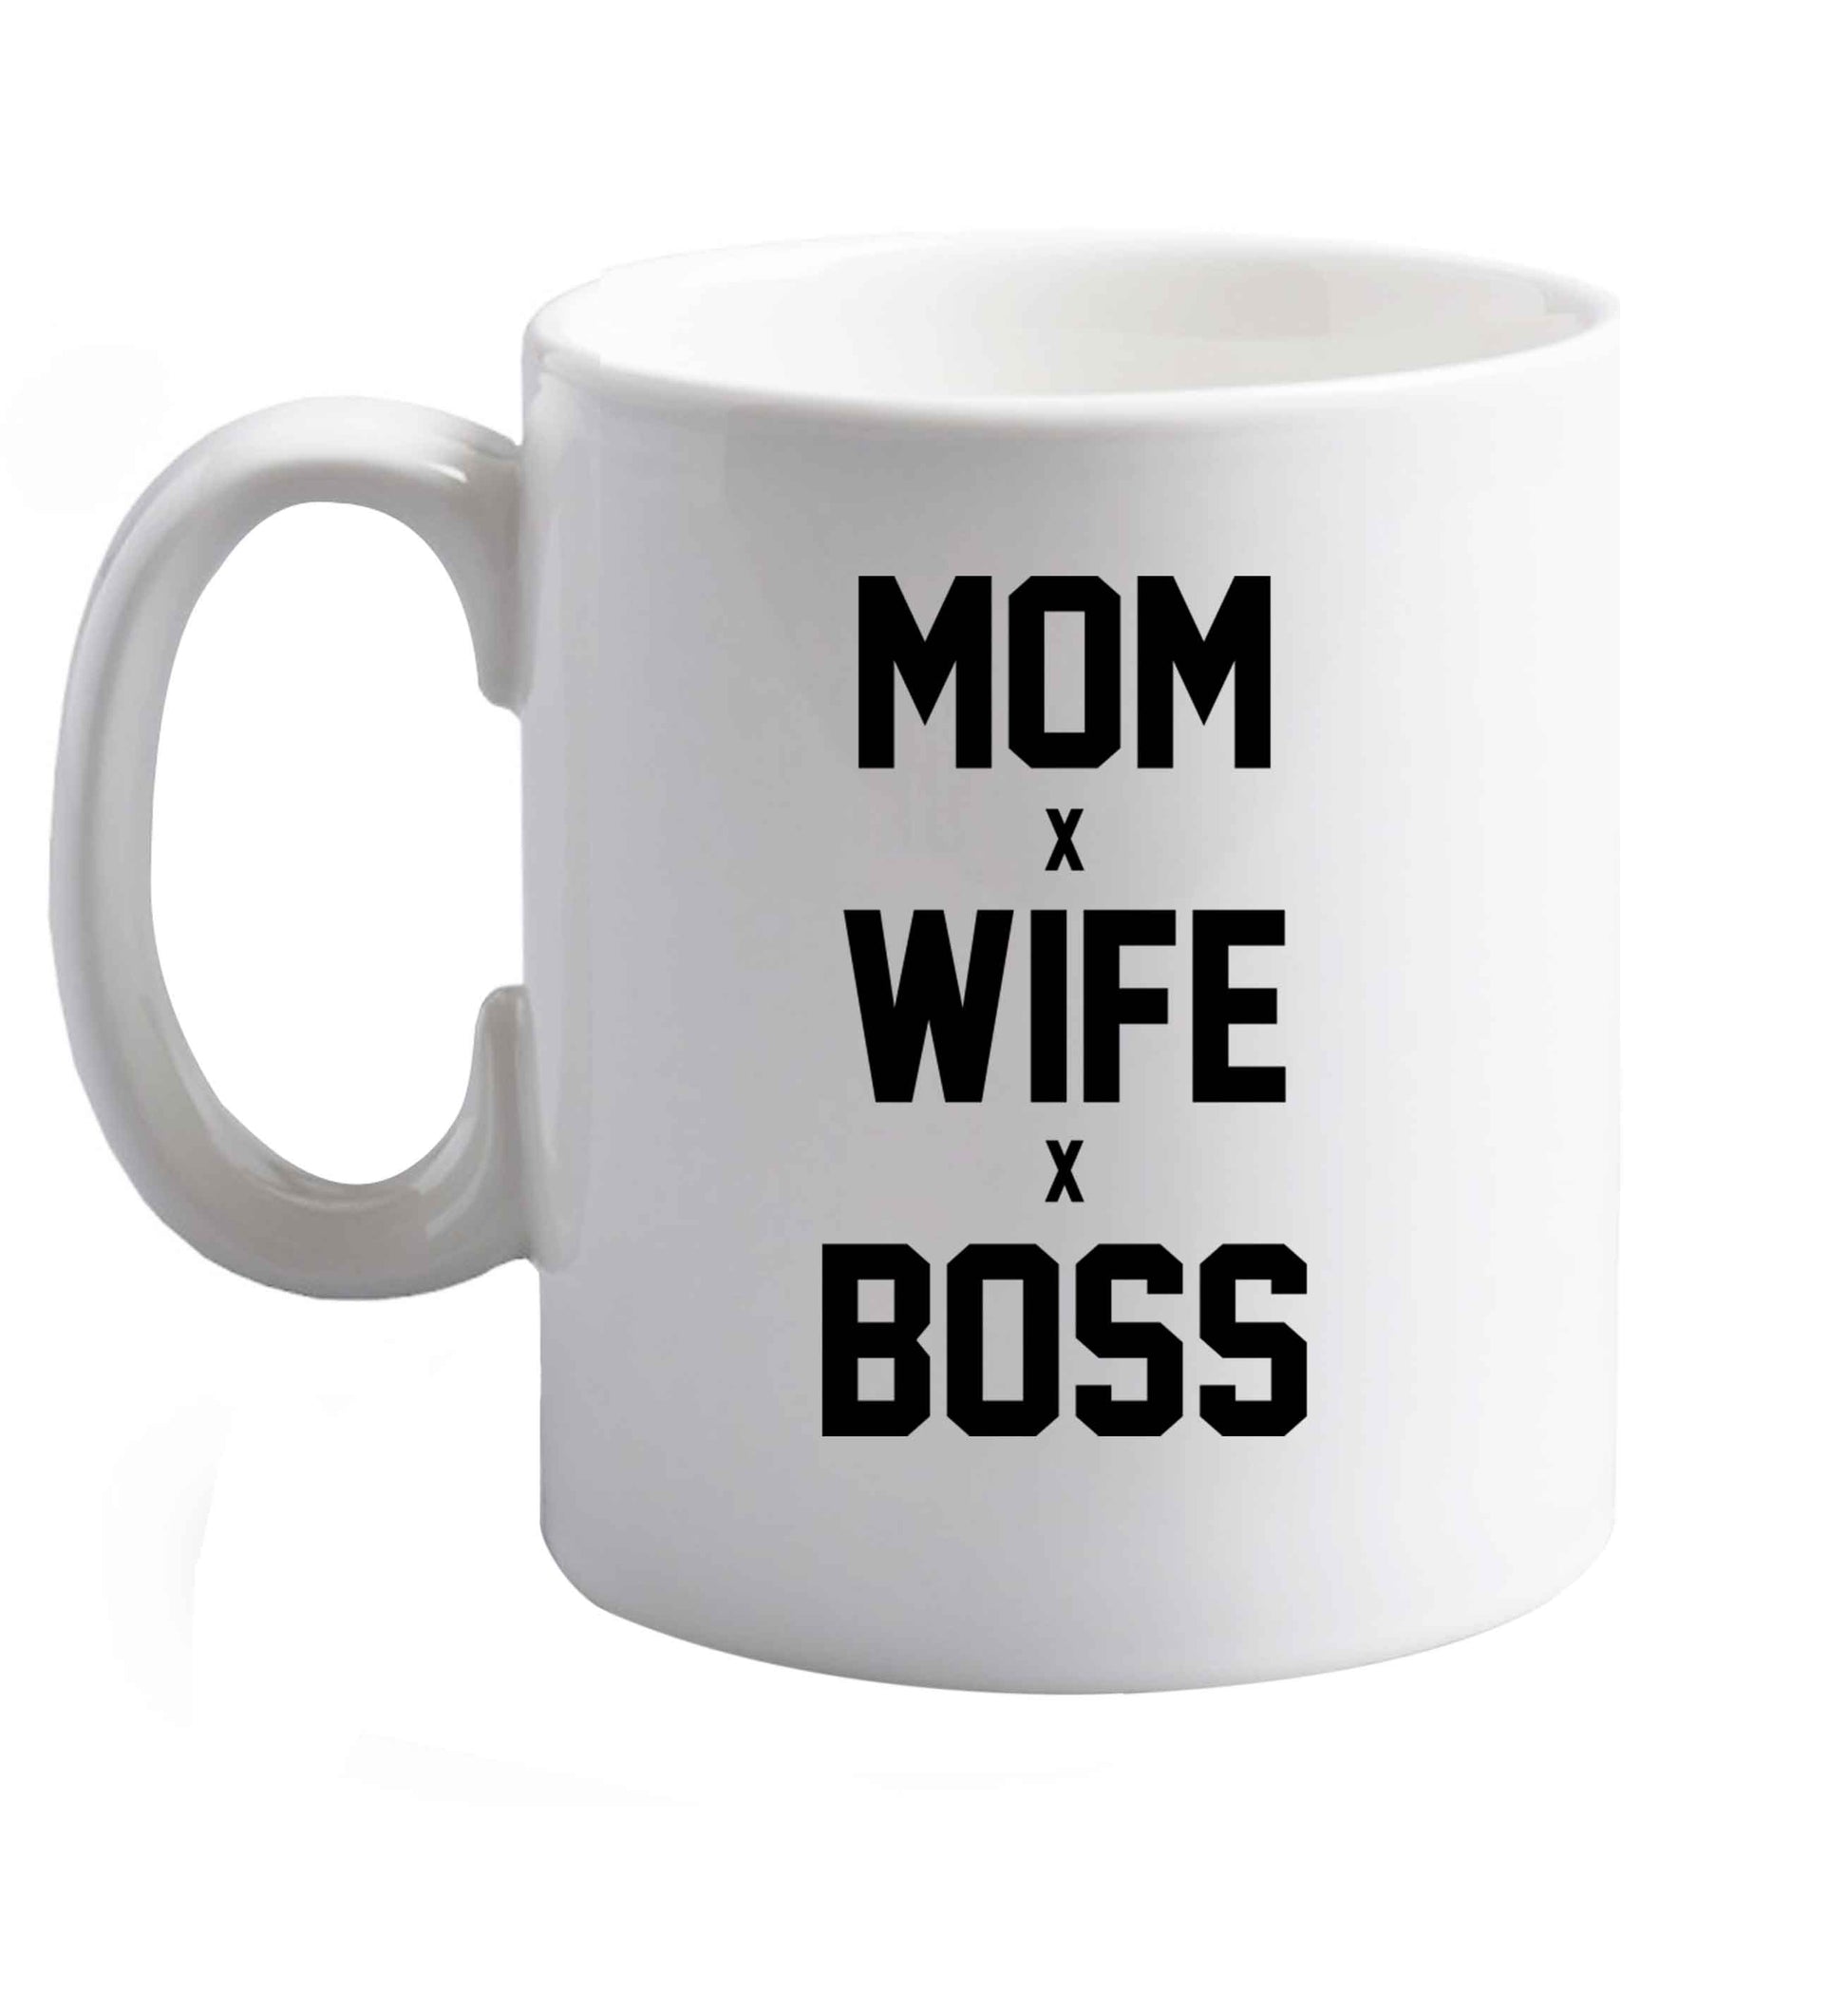 10 oz Mum wife boss ceramic mug right handed